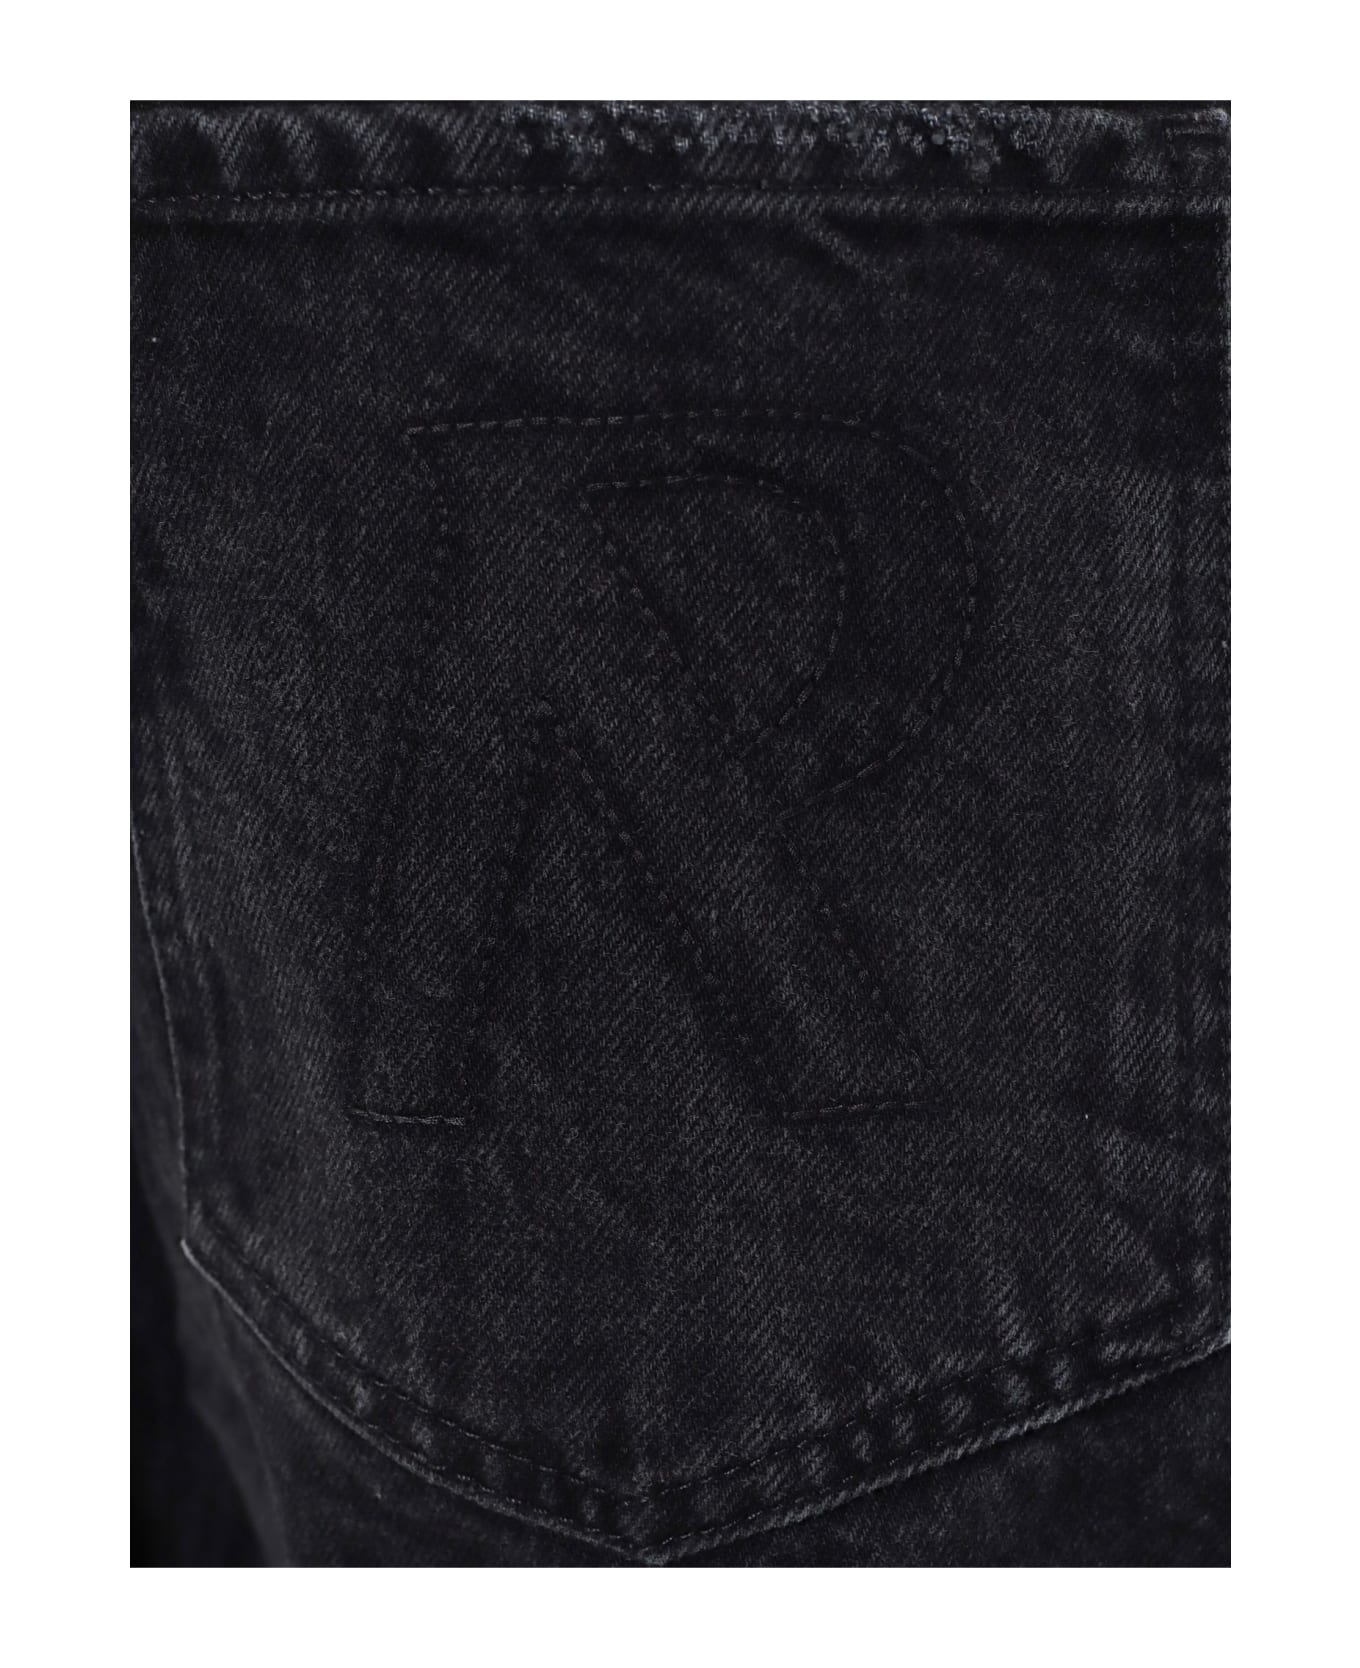 REPRESENT Jeans - Black